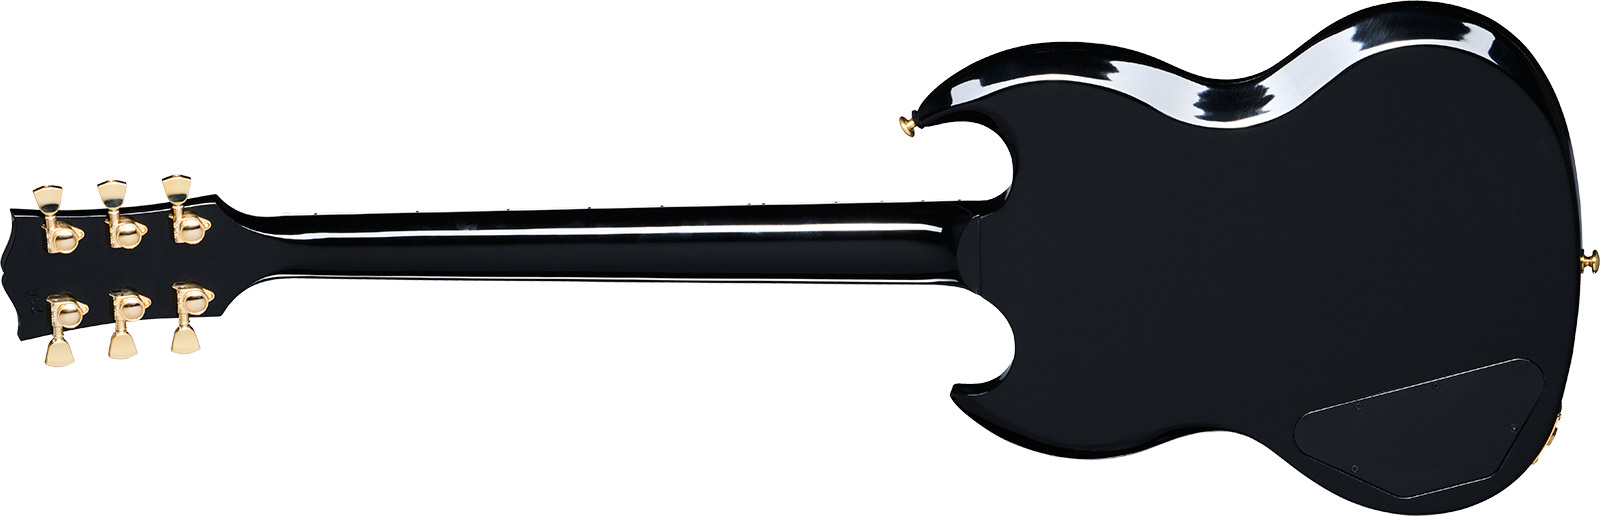 Gibson Sg Supreme Usa 2h Ht Rw - Translucent Ebony Burst - Double Cut E-Gitarre - Variation 1